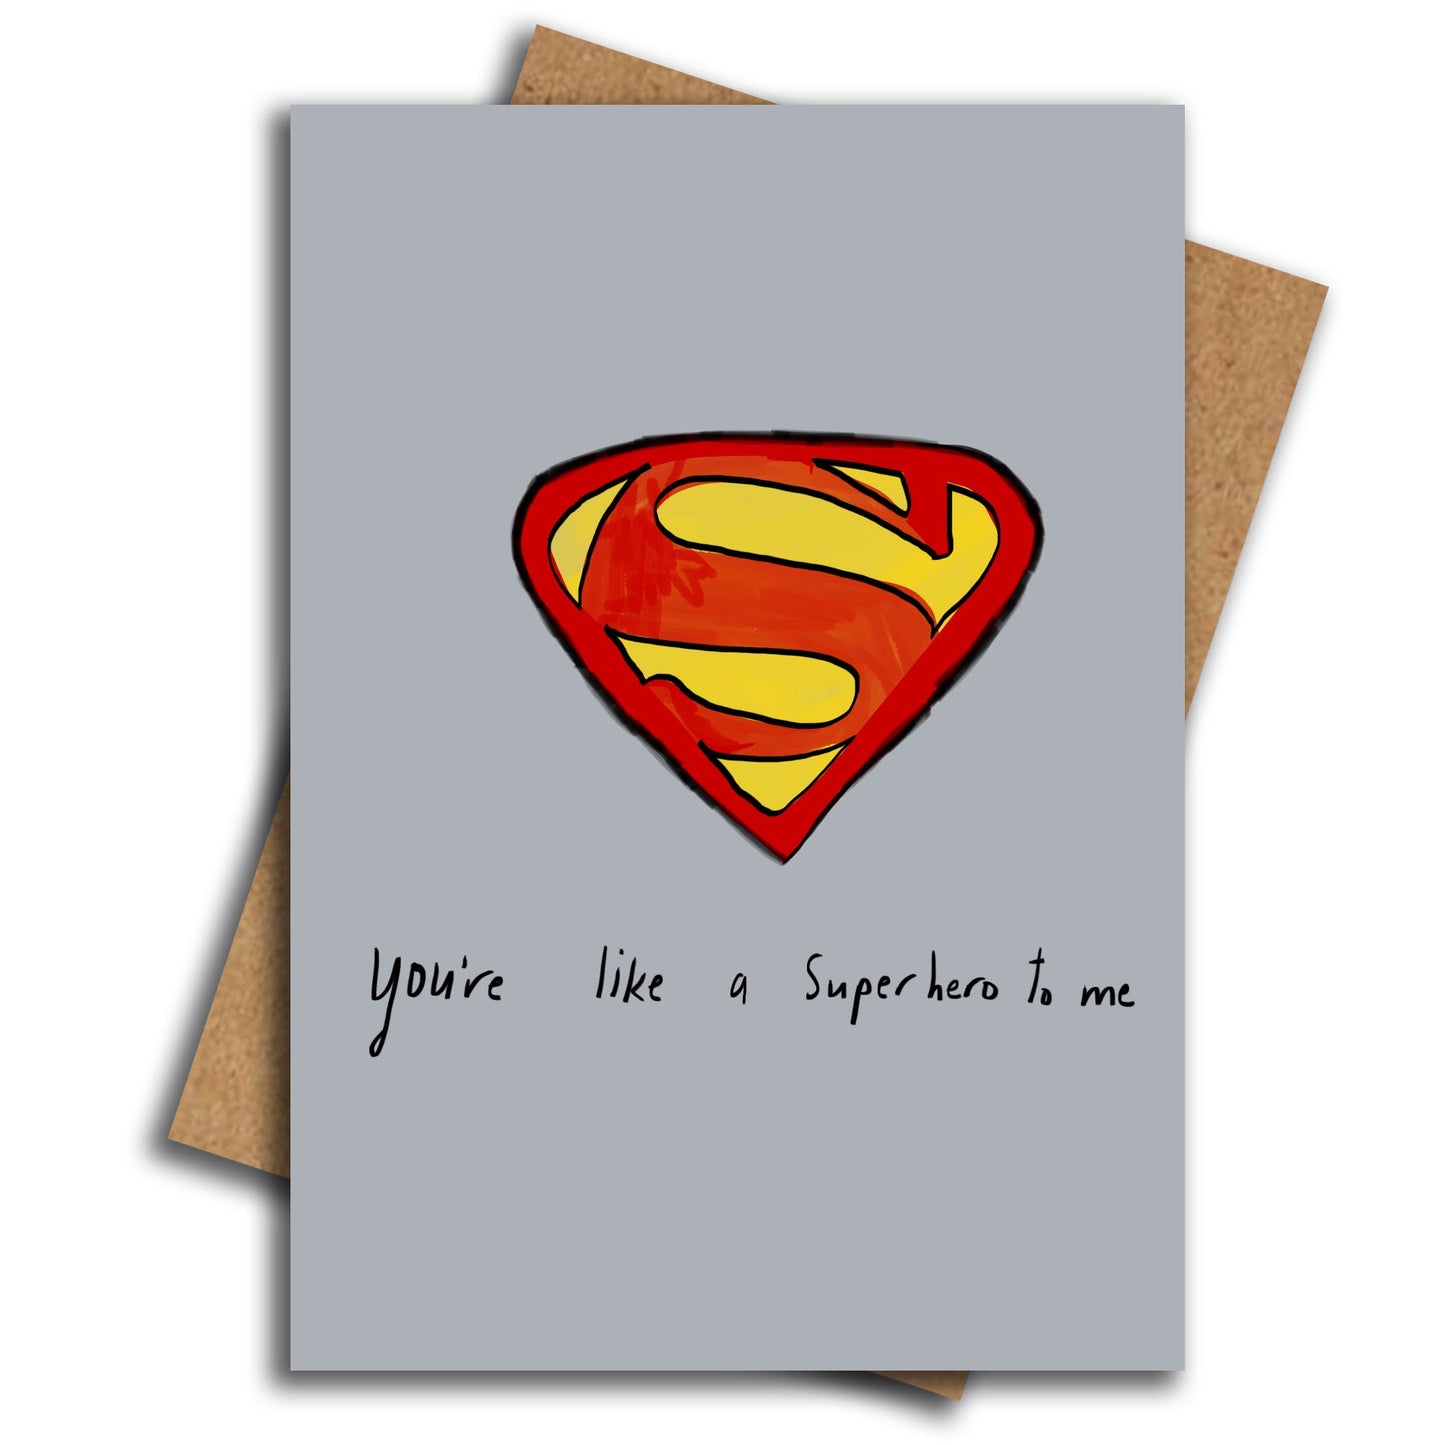 Superhero card